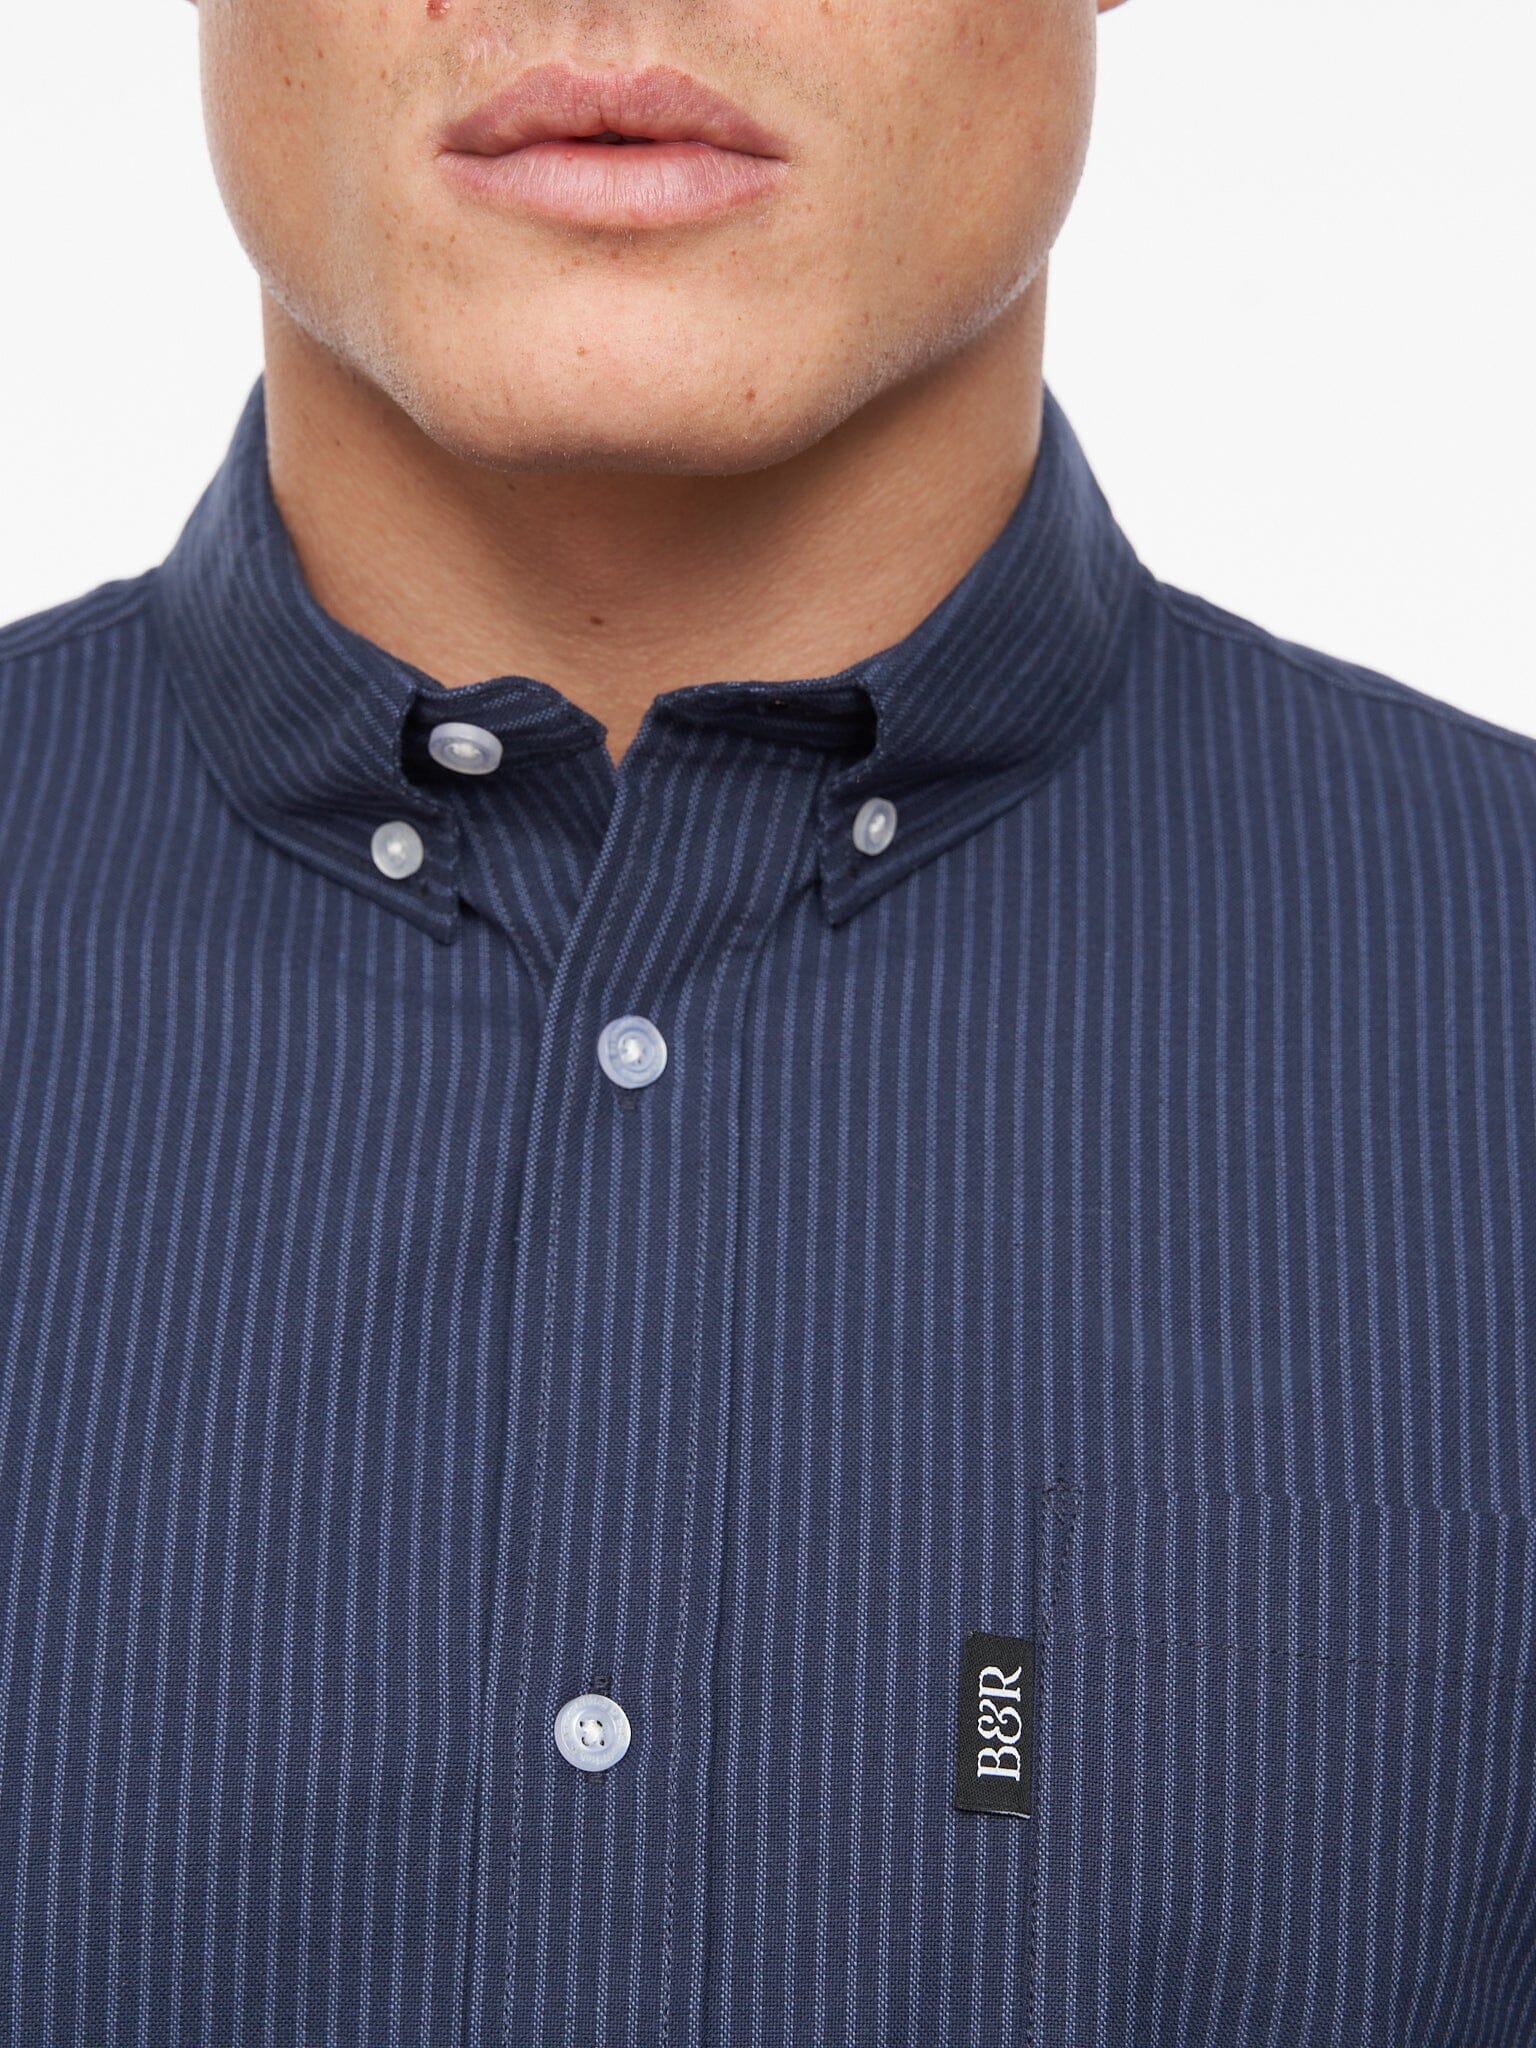 Dewey Oxford Shirt Navy Stripe